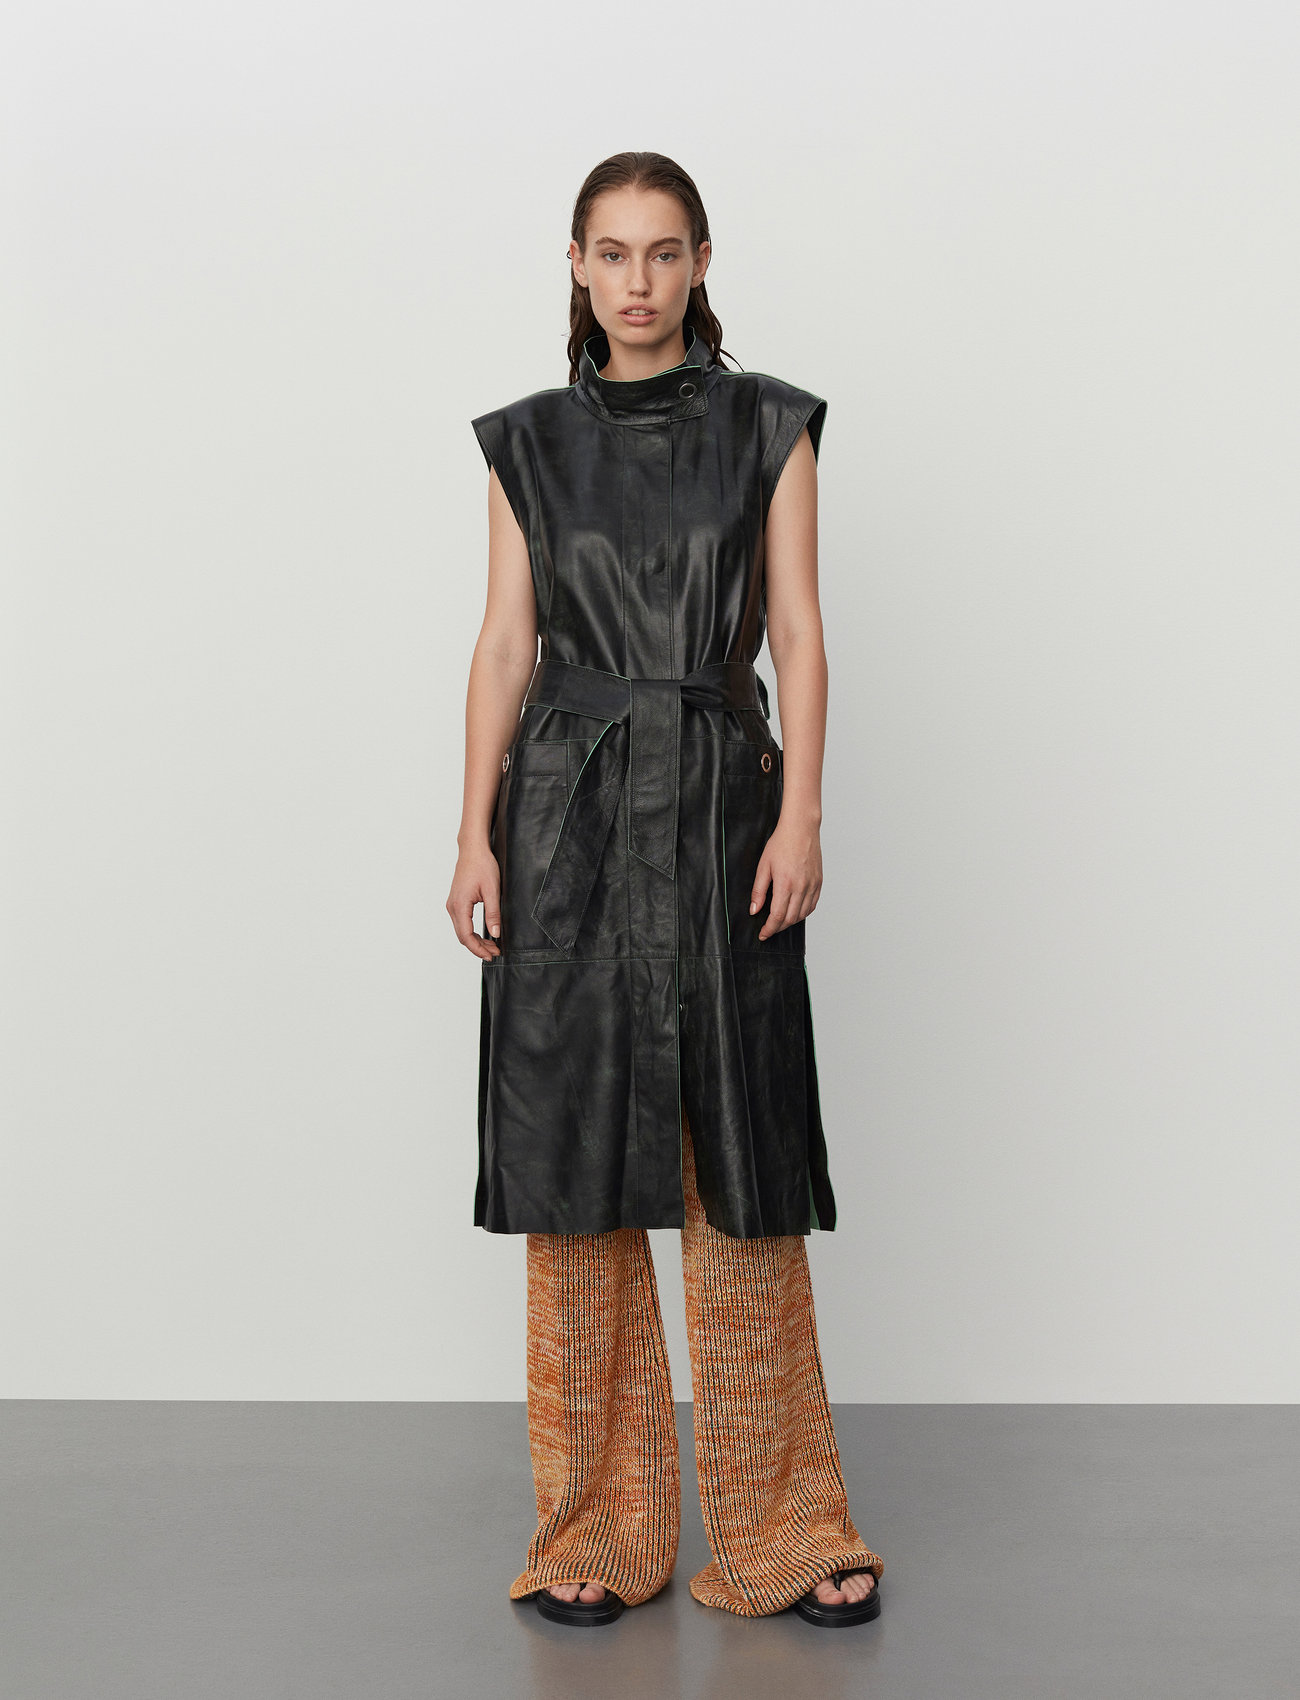 Day Birger et Mikkelsen - Keith - Leather Contemporary - black - 0